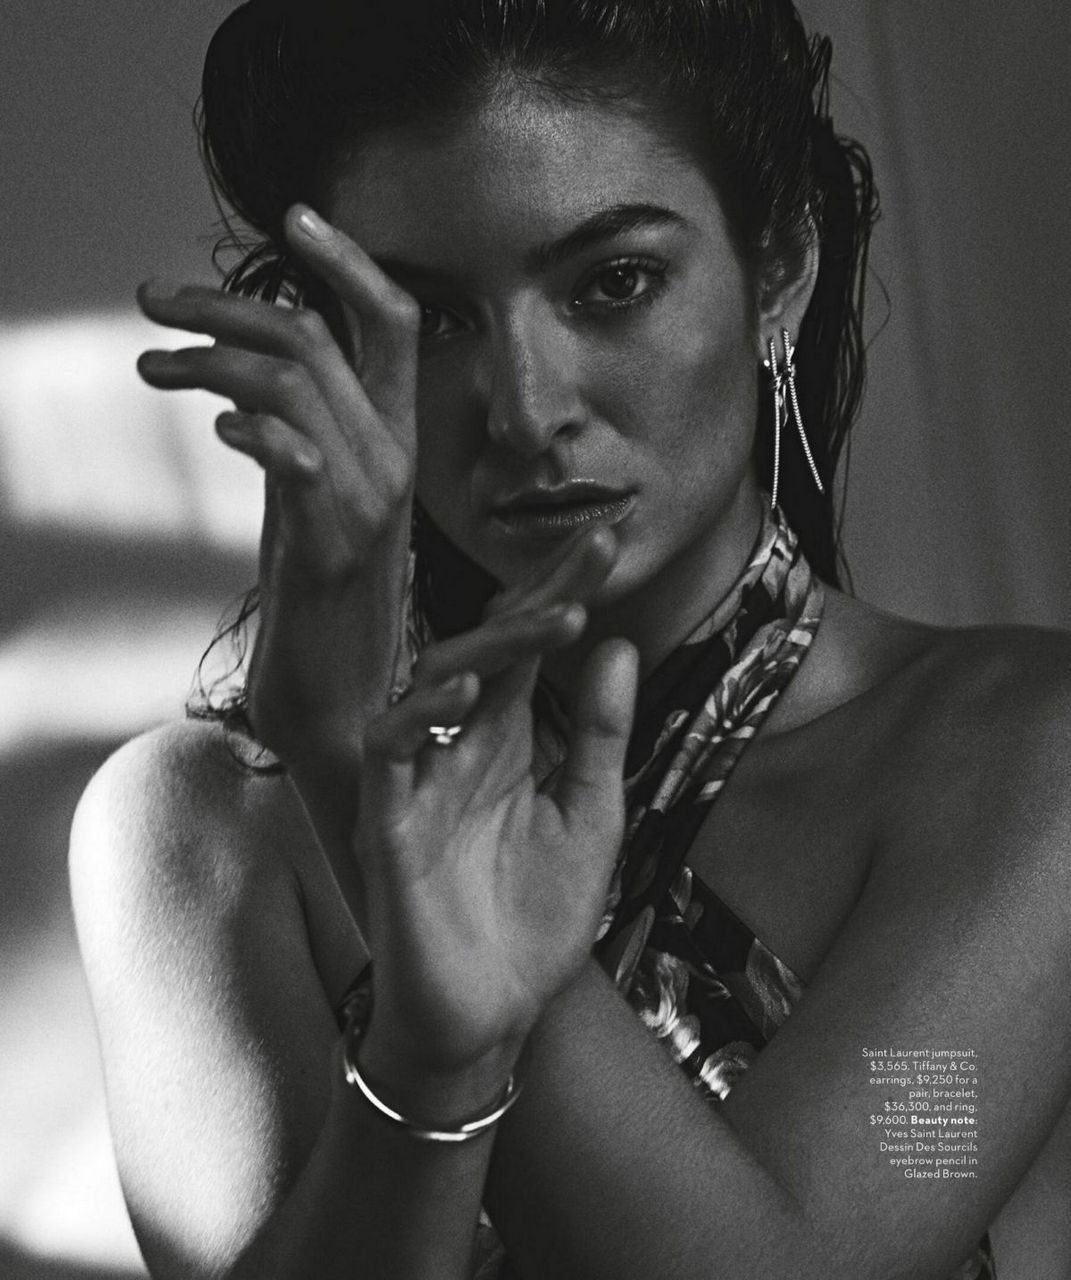 Lorde Vogue Magazine Australia March